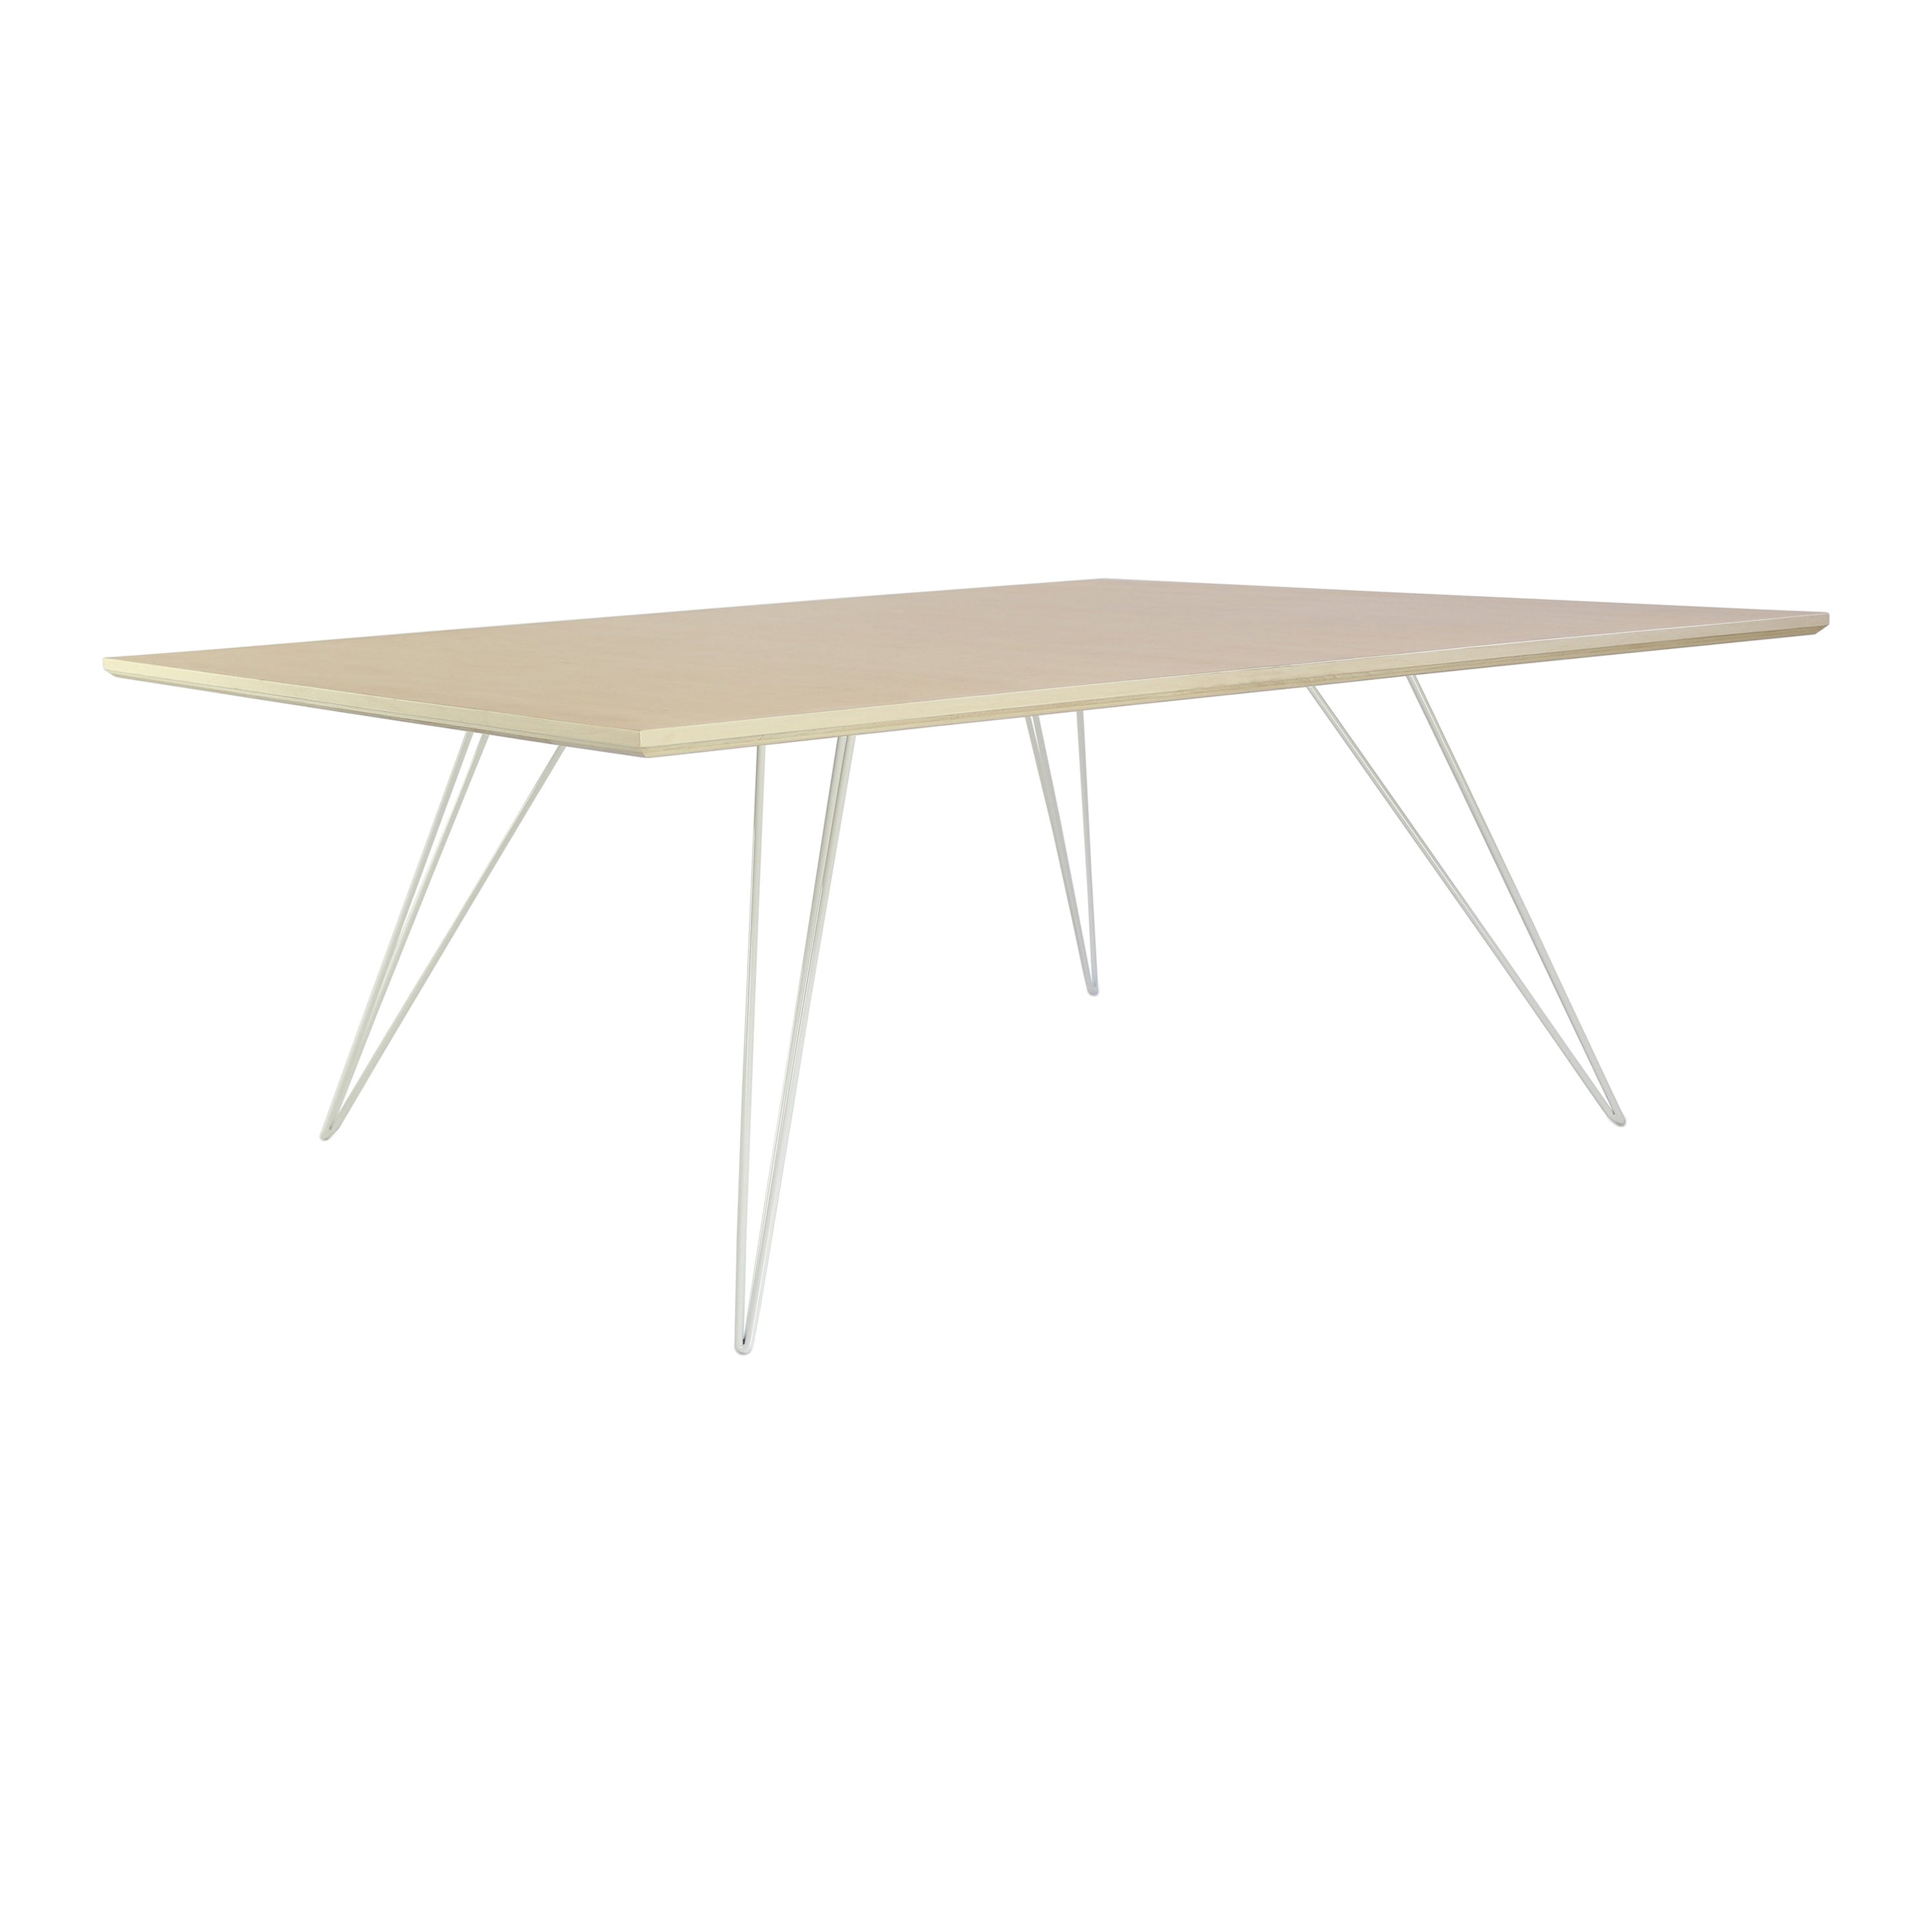 Williams Hairpin Coffee Table Rectangular Maple White